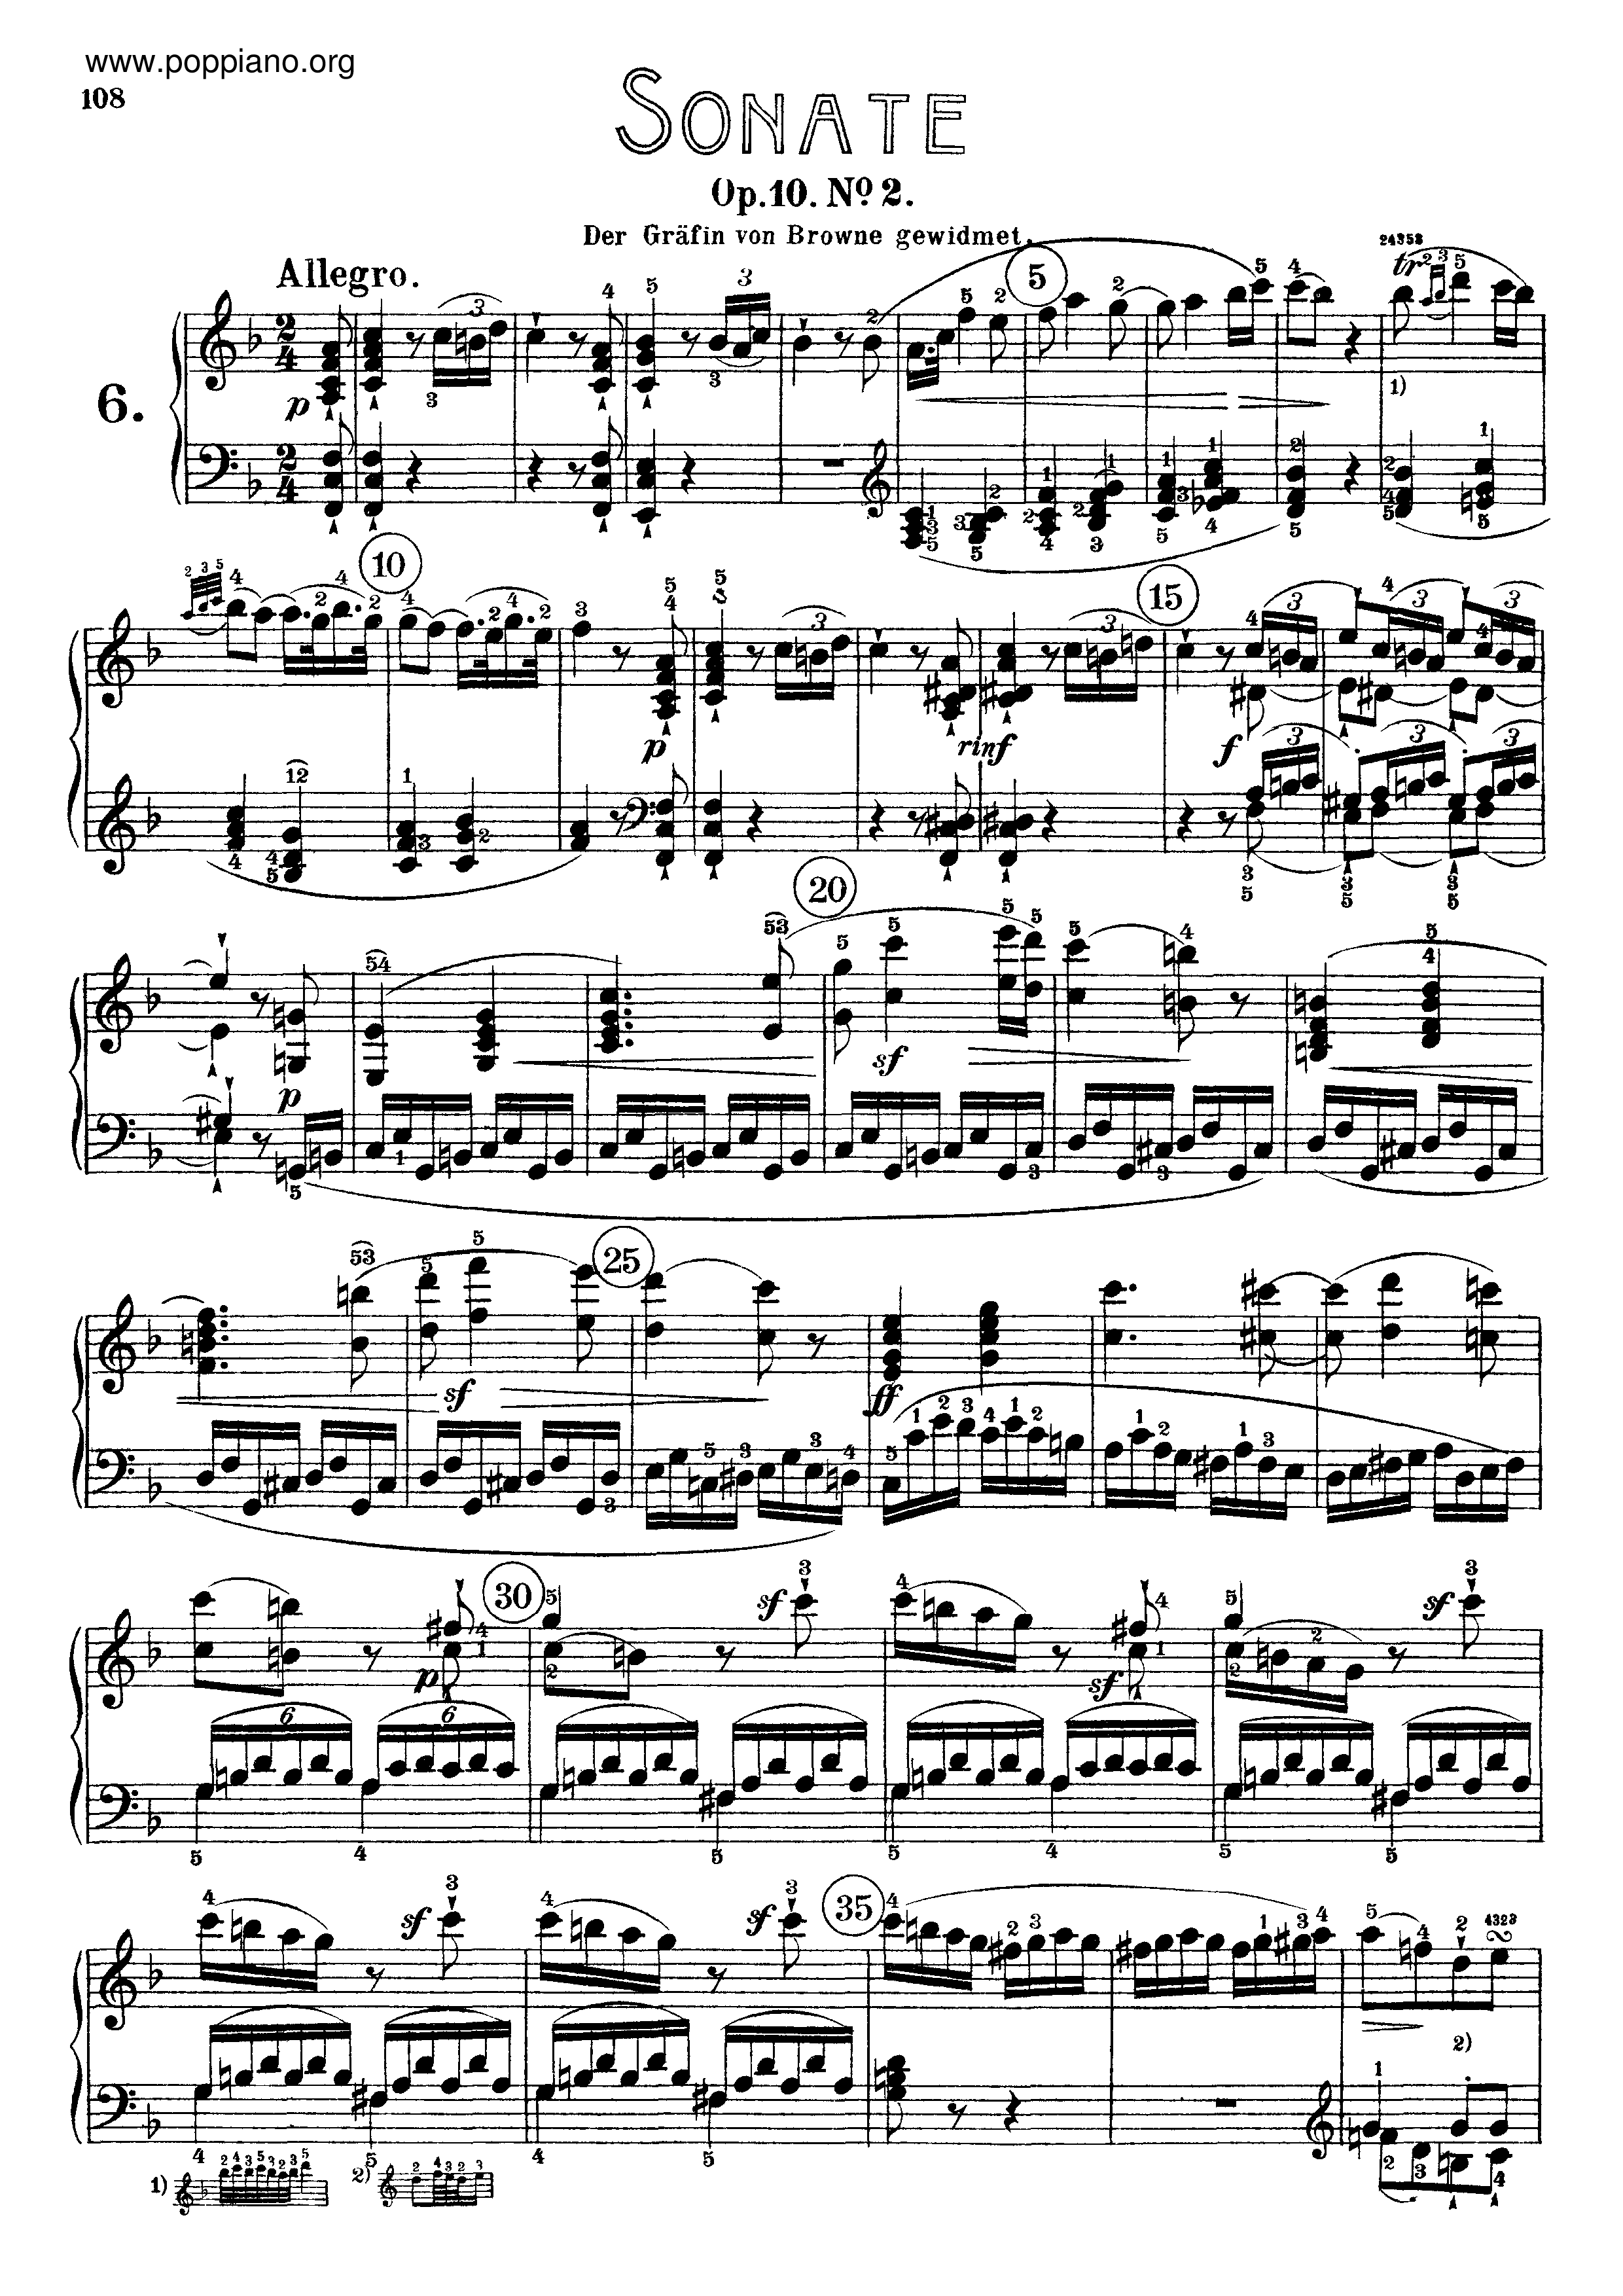 Sonata No. 6 in F majorピアノ譜